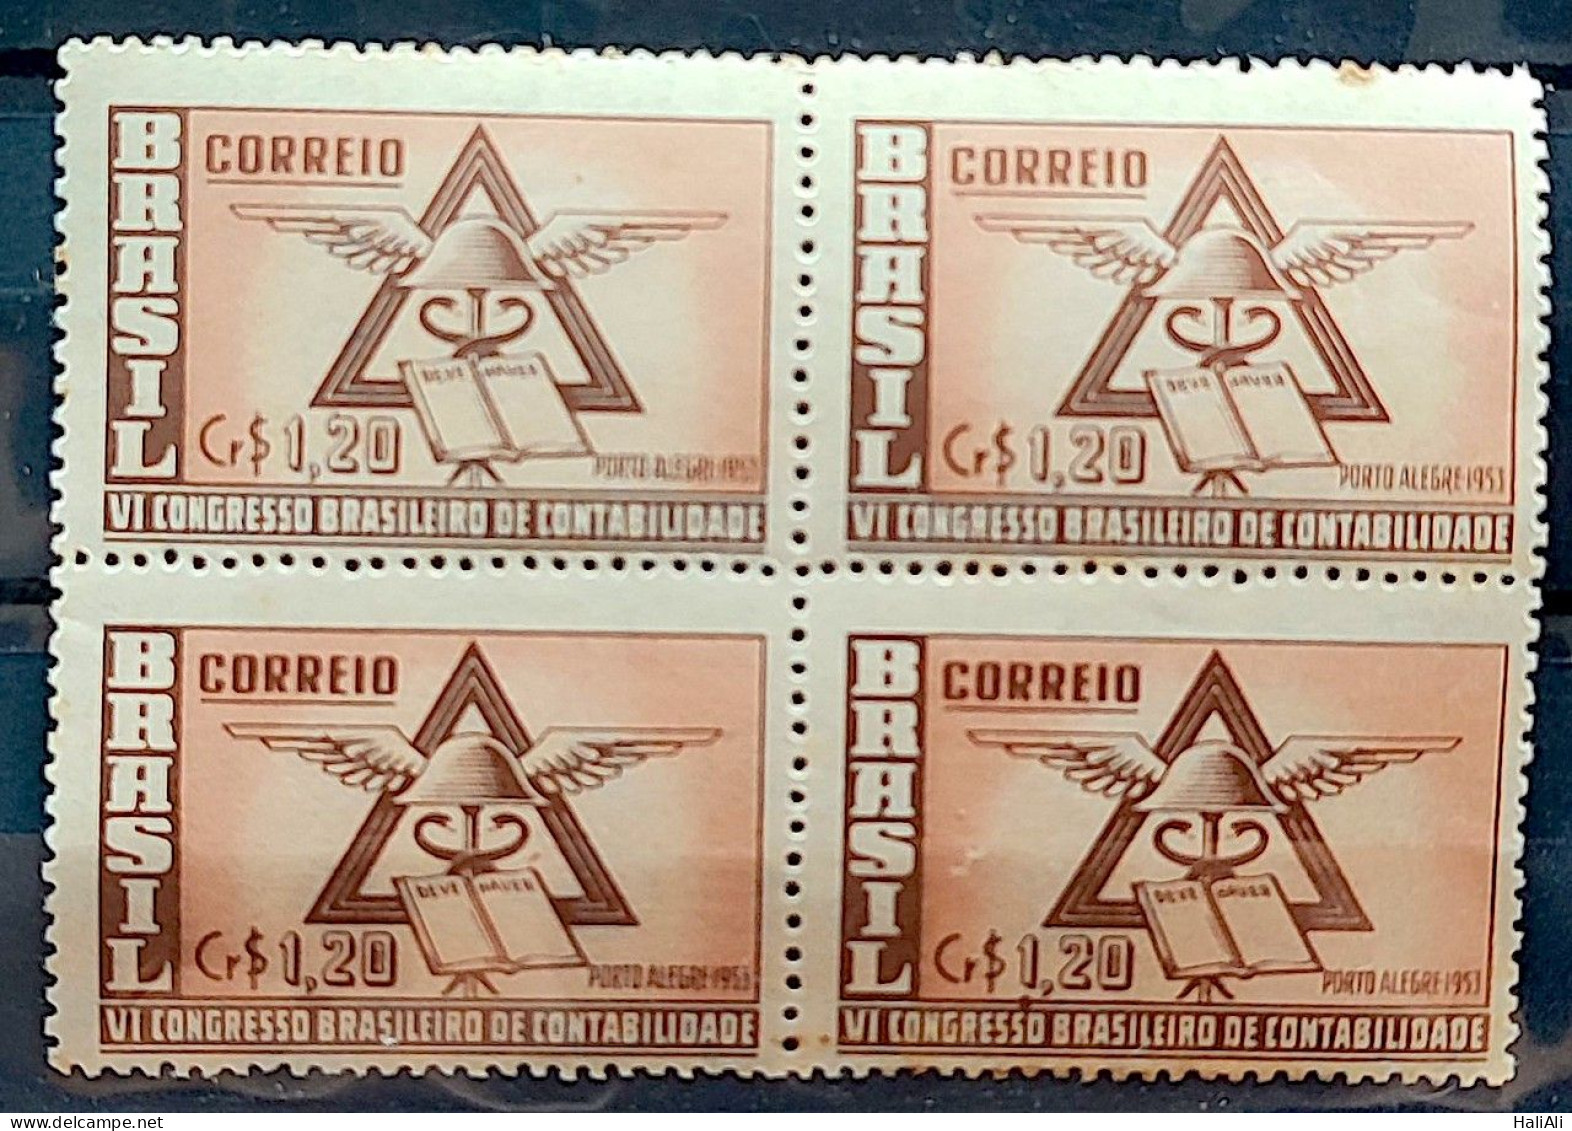 C 296 Brazil Stamp Accounting Congress Porto Alegre Economy 1953 Block Of 4 2 - Nuevos